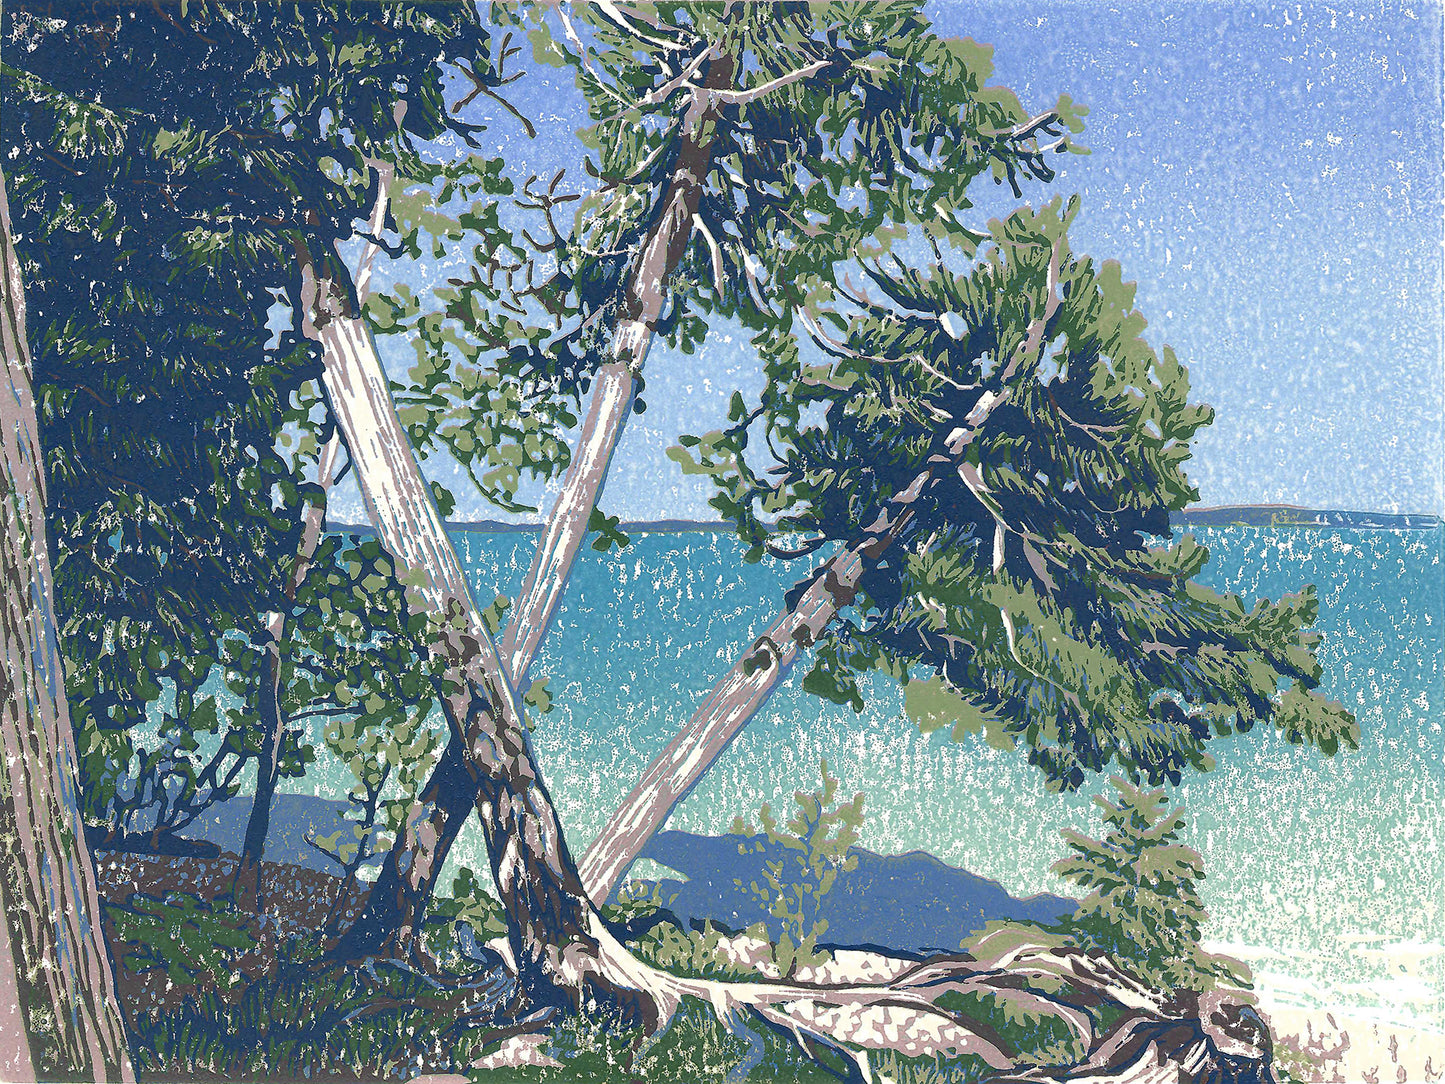 Cedar Beach Blank Greeting Card by Natalia Wohletz of Peninsula Prints.